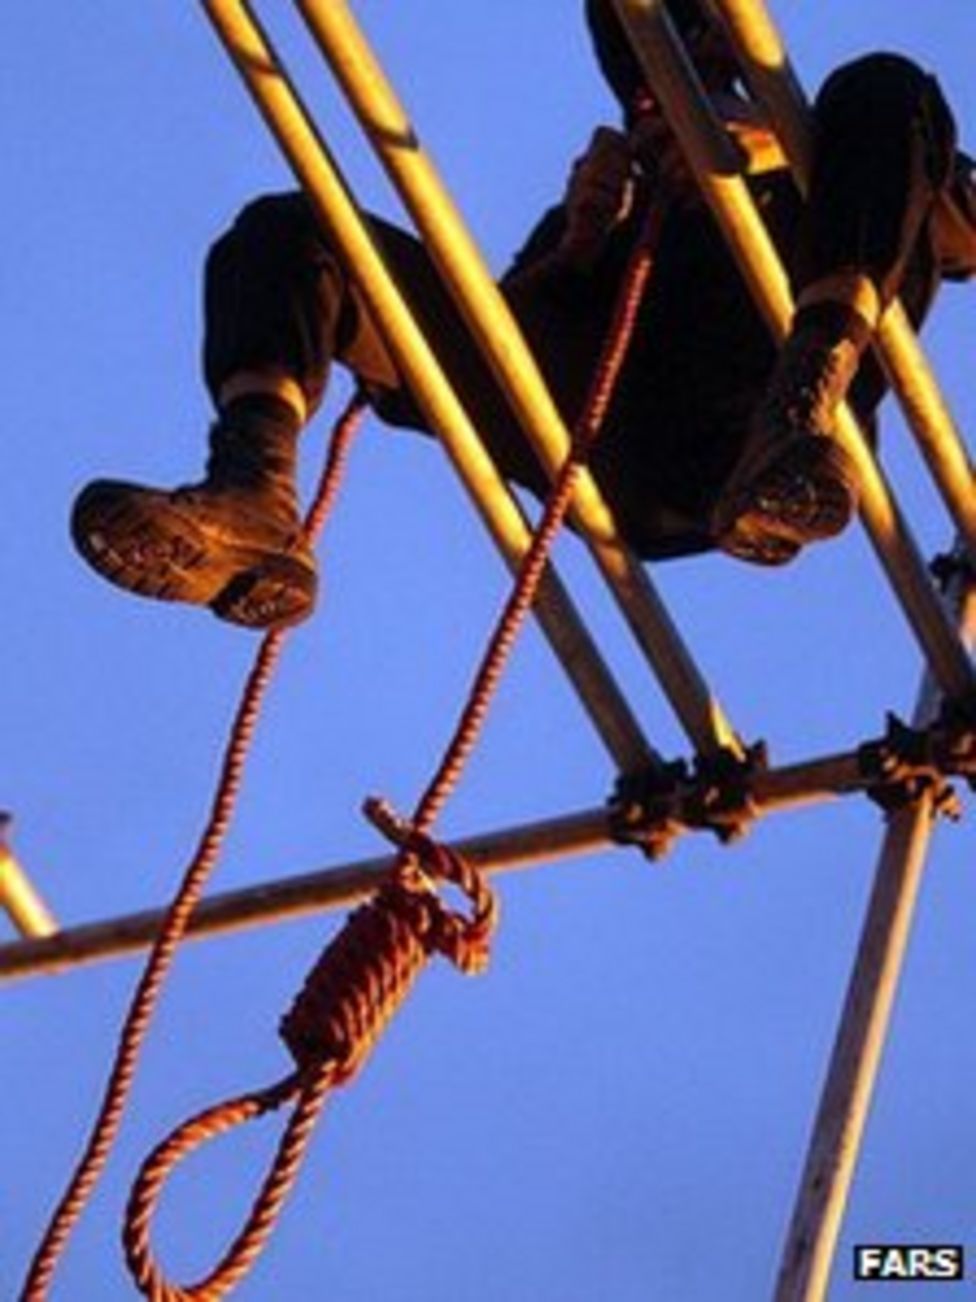 Rapists Public Hanging Sparks Iran Debate Bbc News